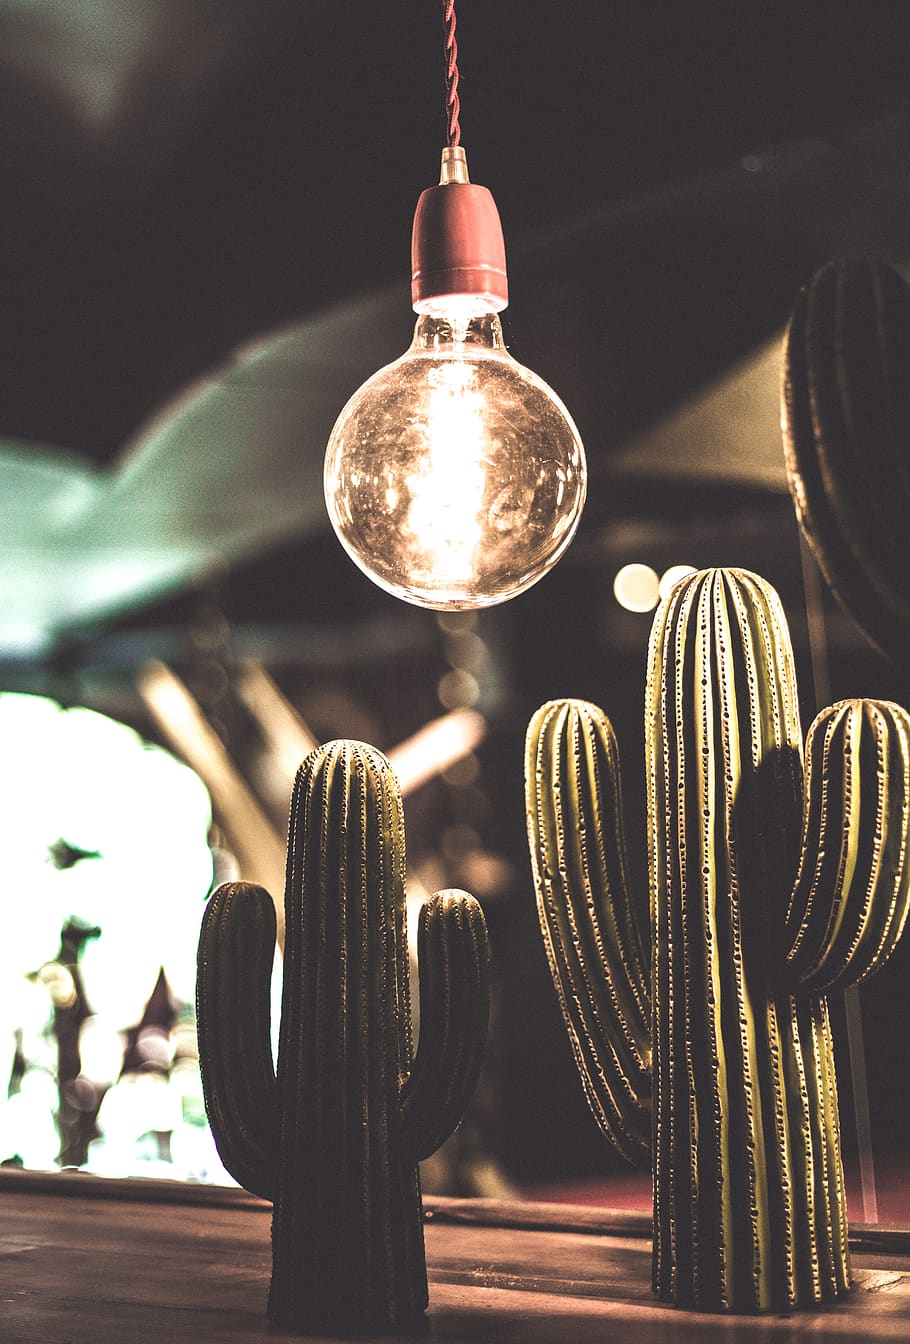 iran, tehran province, bulb, light, kaktus, light bulb, lights